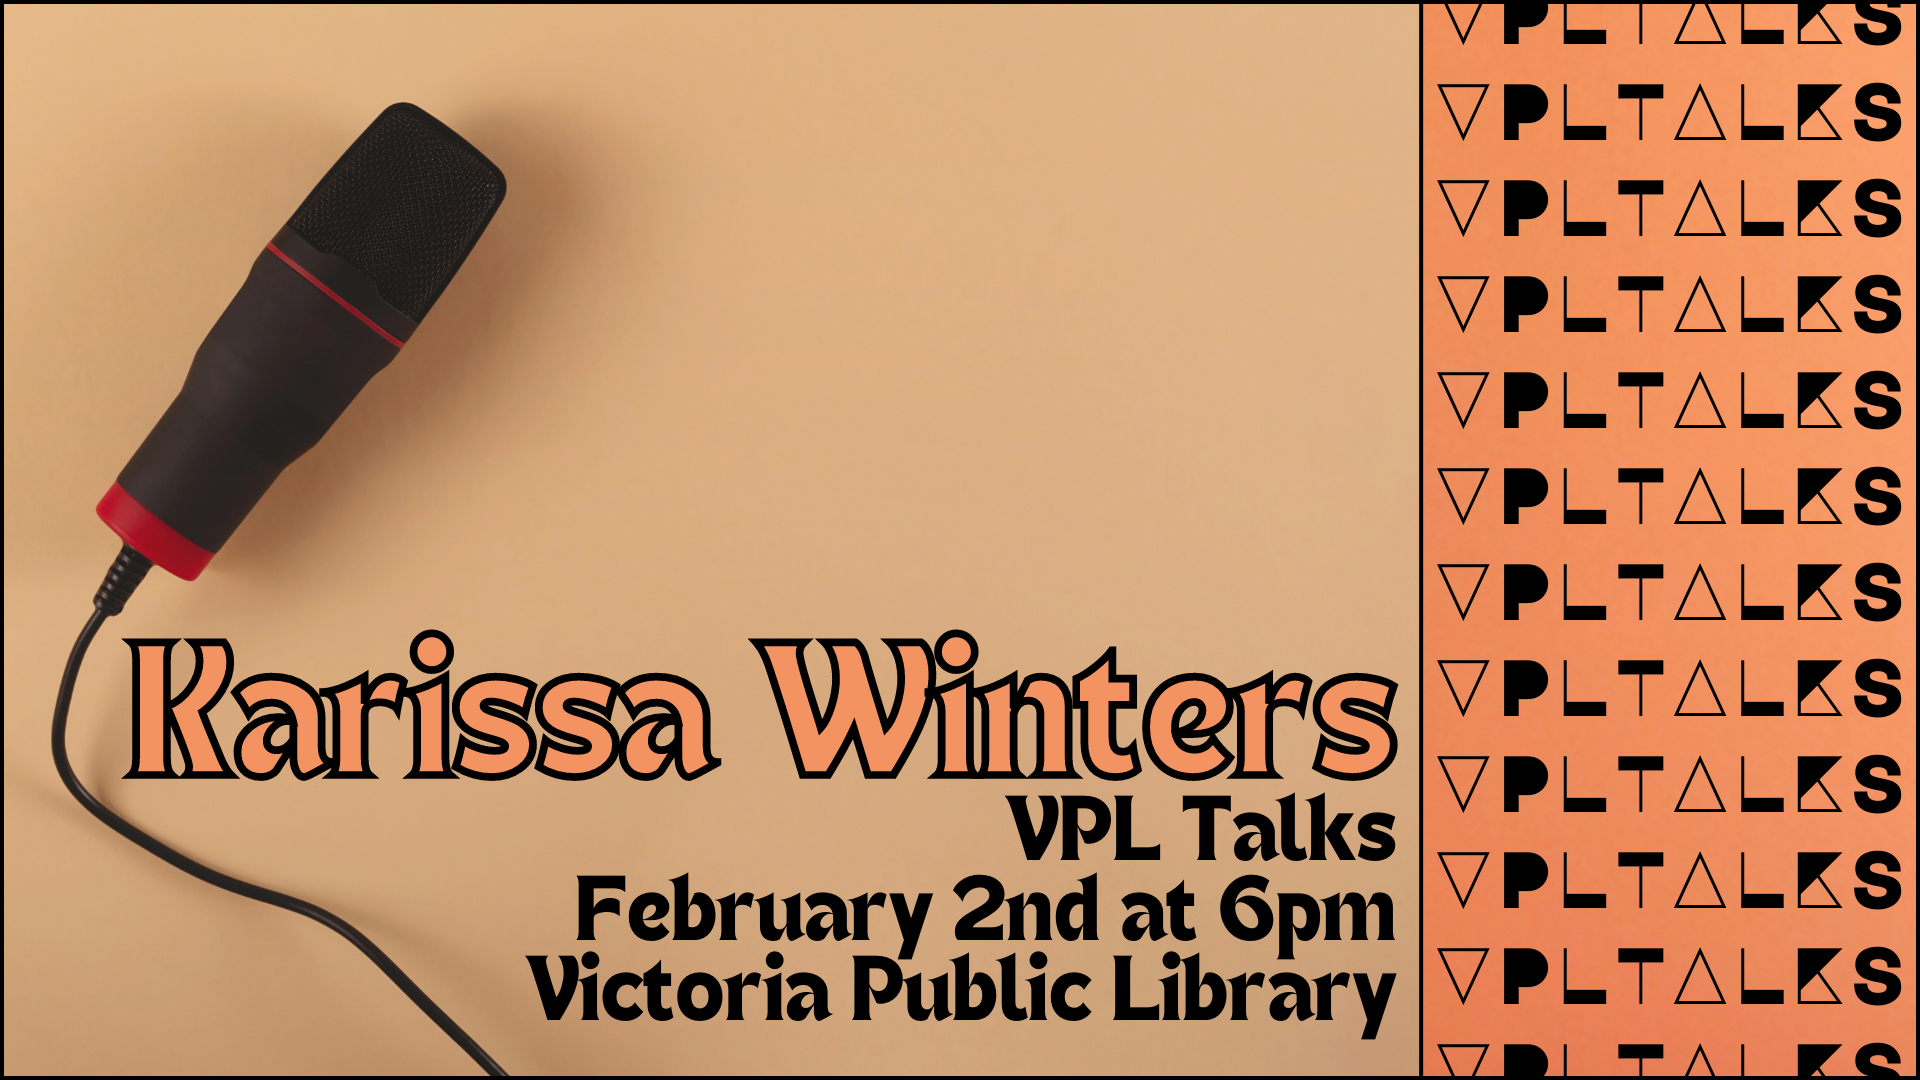 VPL Talks with Karissa Winters February 2nd at 6pm